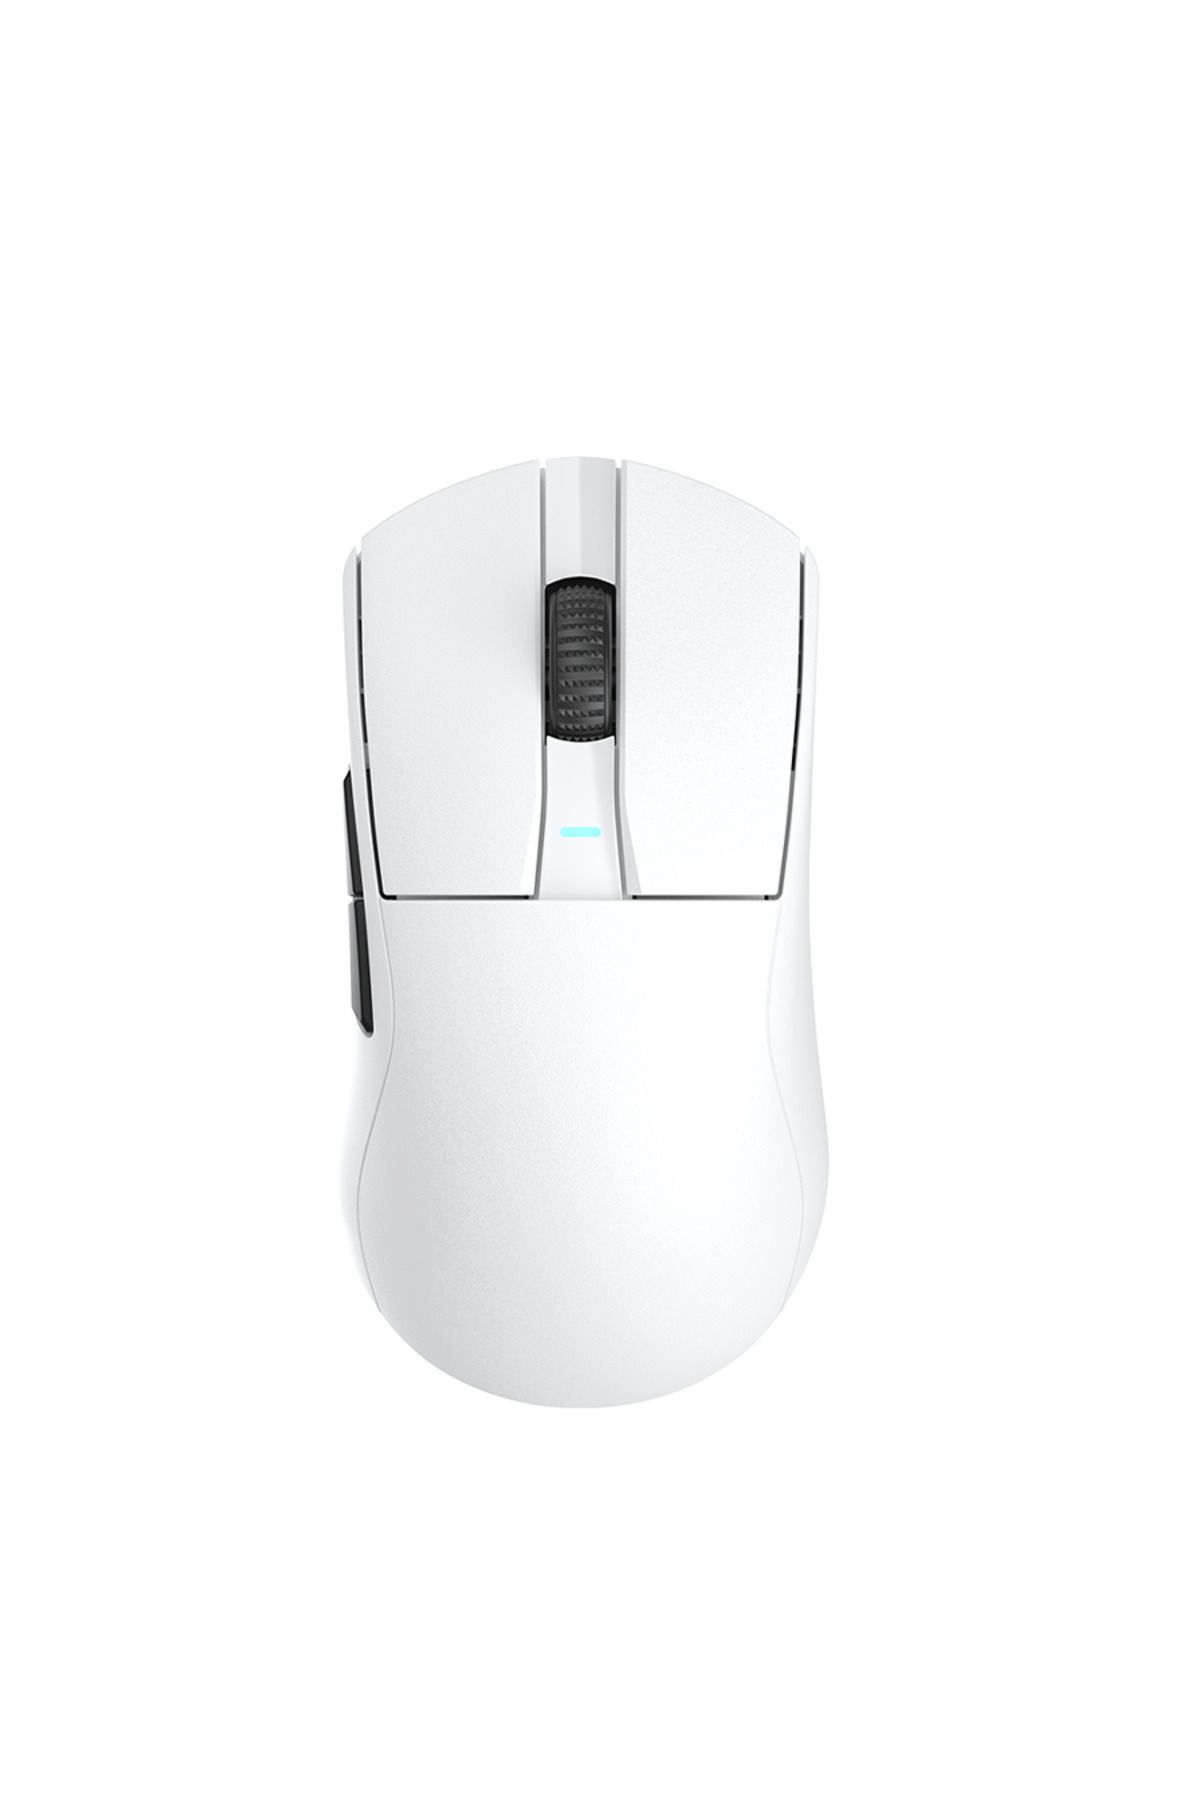 DAREU A950 Pro 4K Ultra Hafif Wireless Gaming Mouse - Beyaz